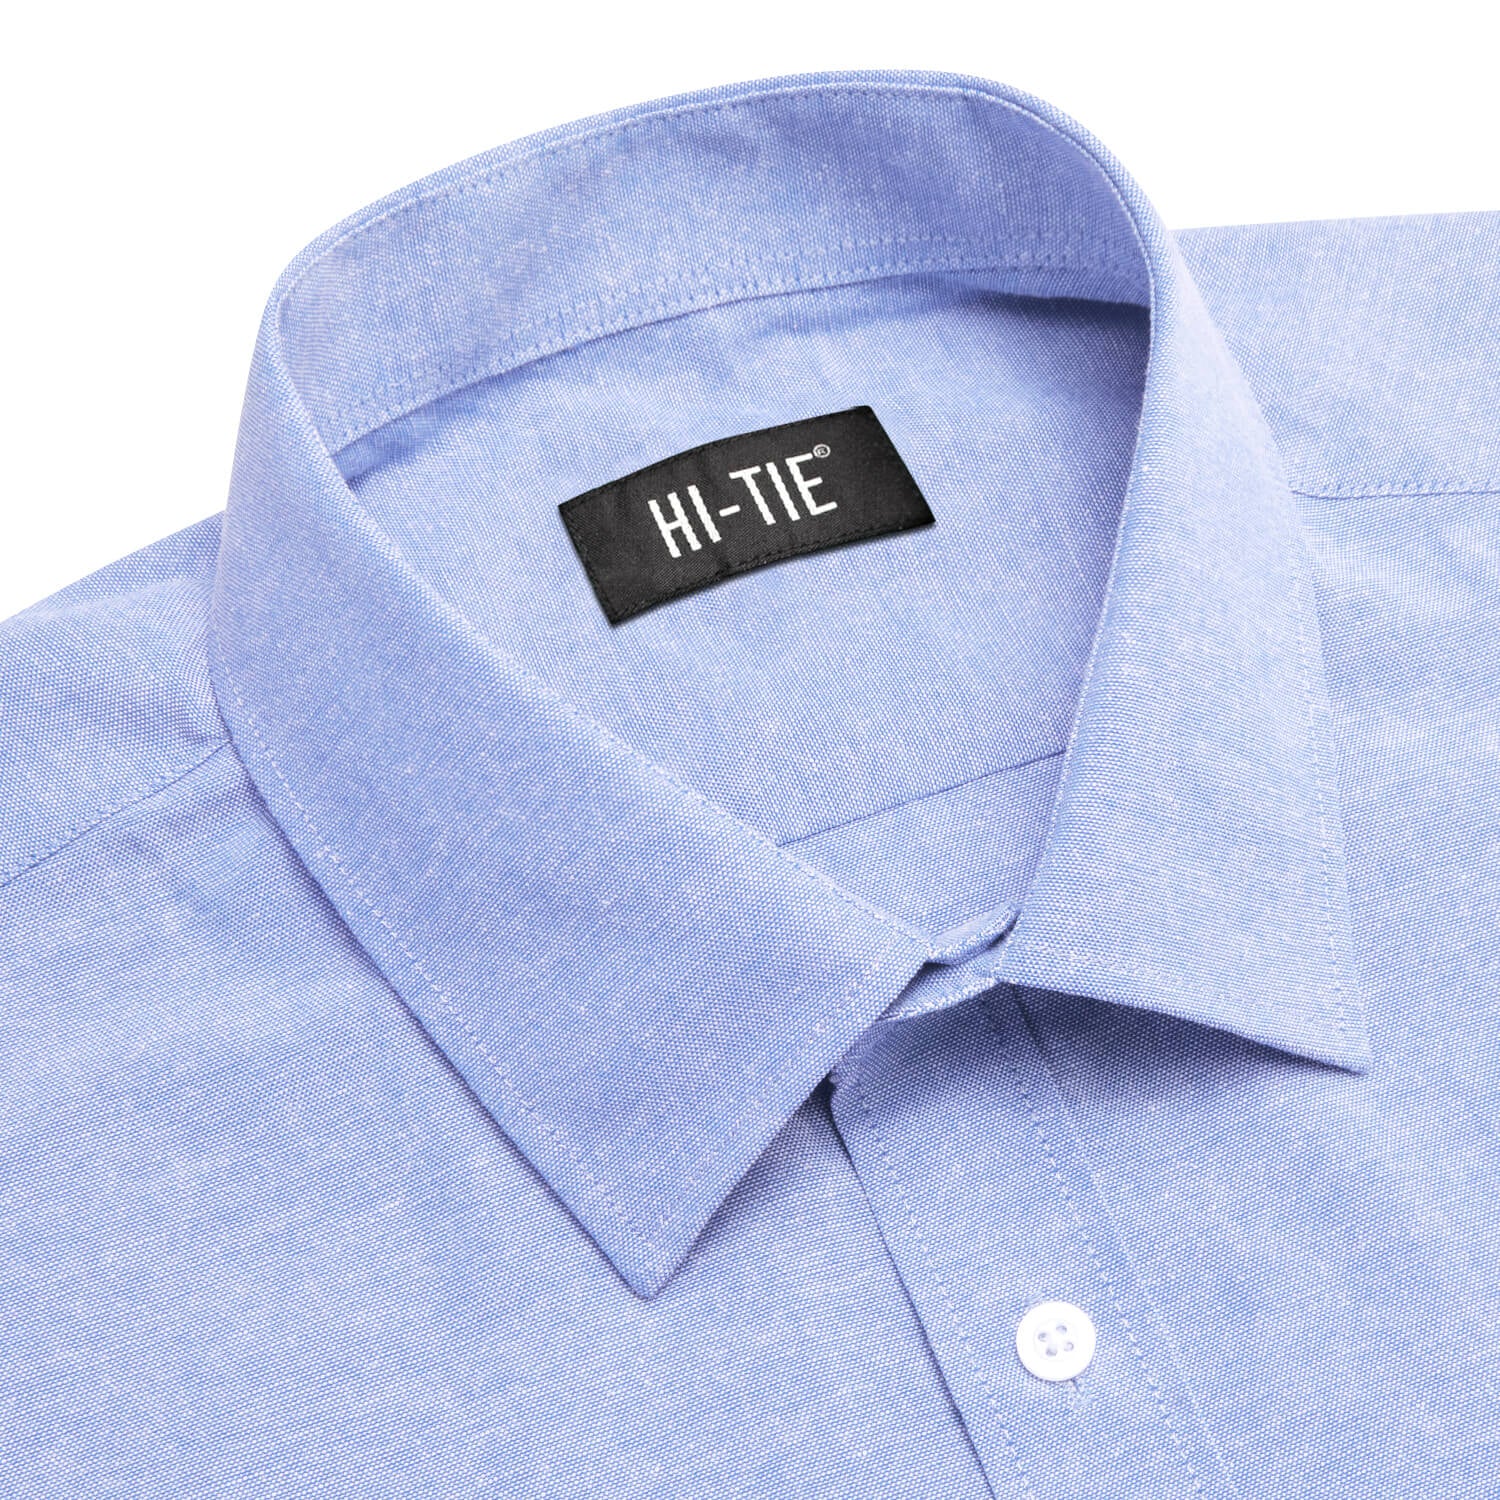 Hi-Tie Button Down Shirt Steel Blue Solid Silk Men's Shirt Business